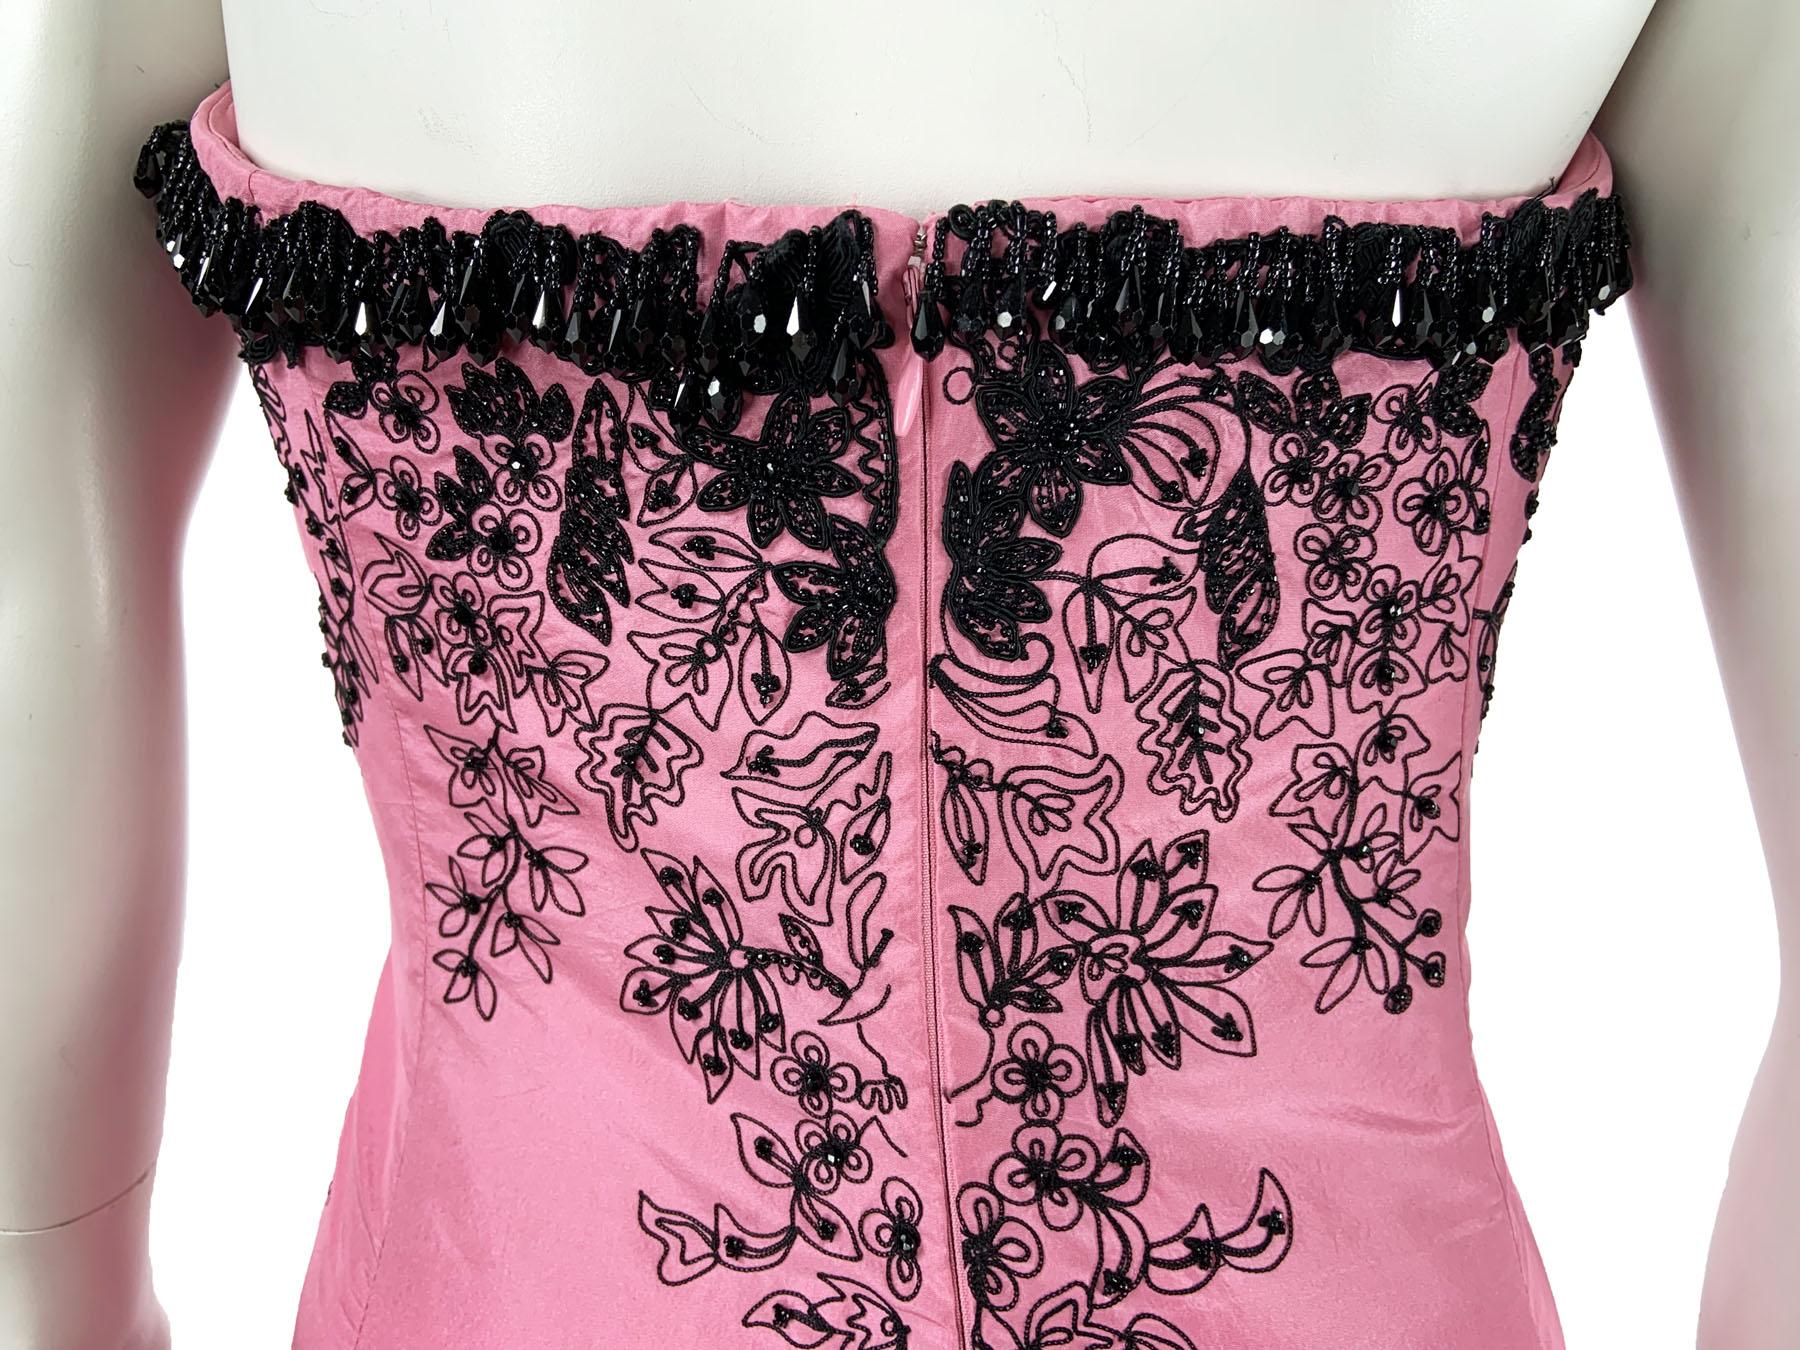 Oscar de la Renta S/S 2004 Collection Pink Silk Taffeta Embellished Dress Gown 8 For Sale 7